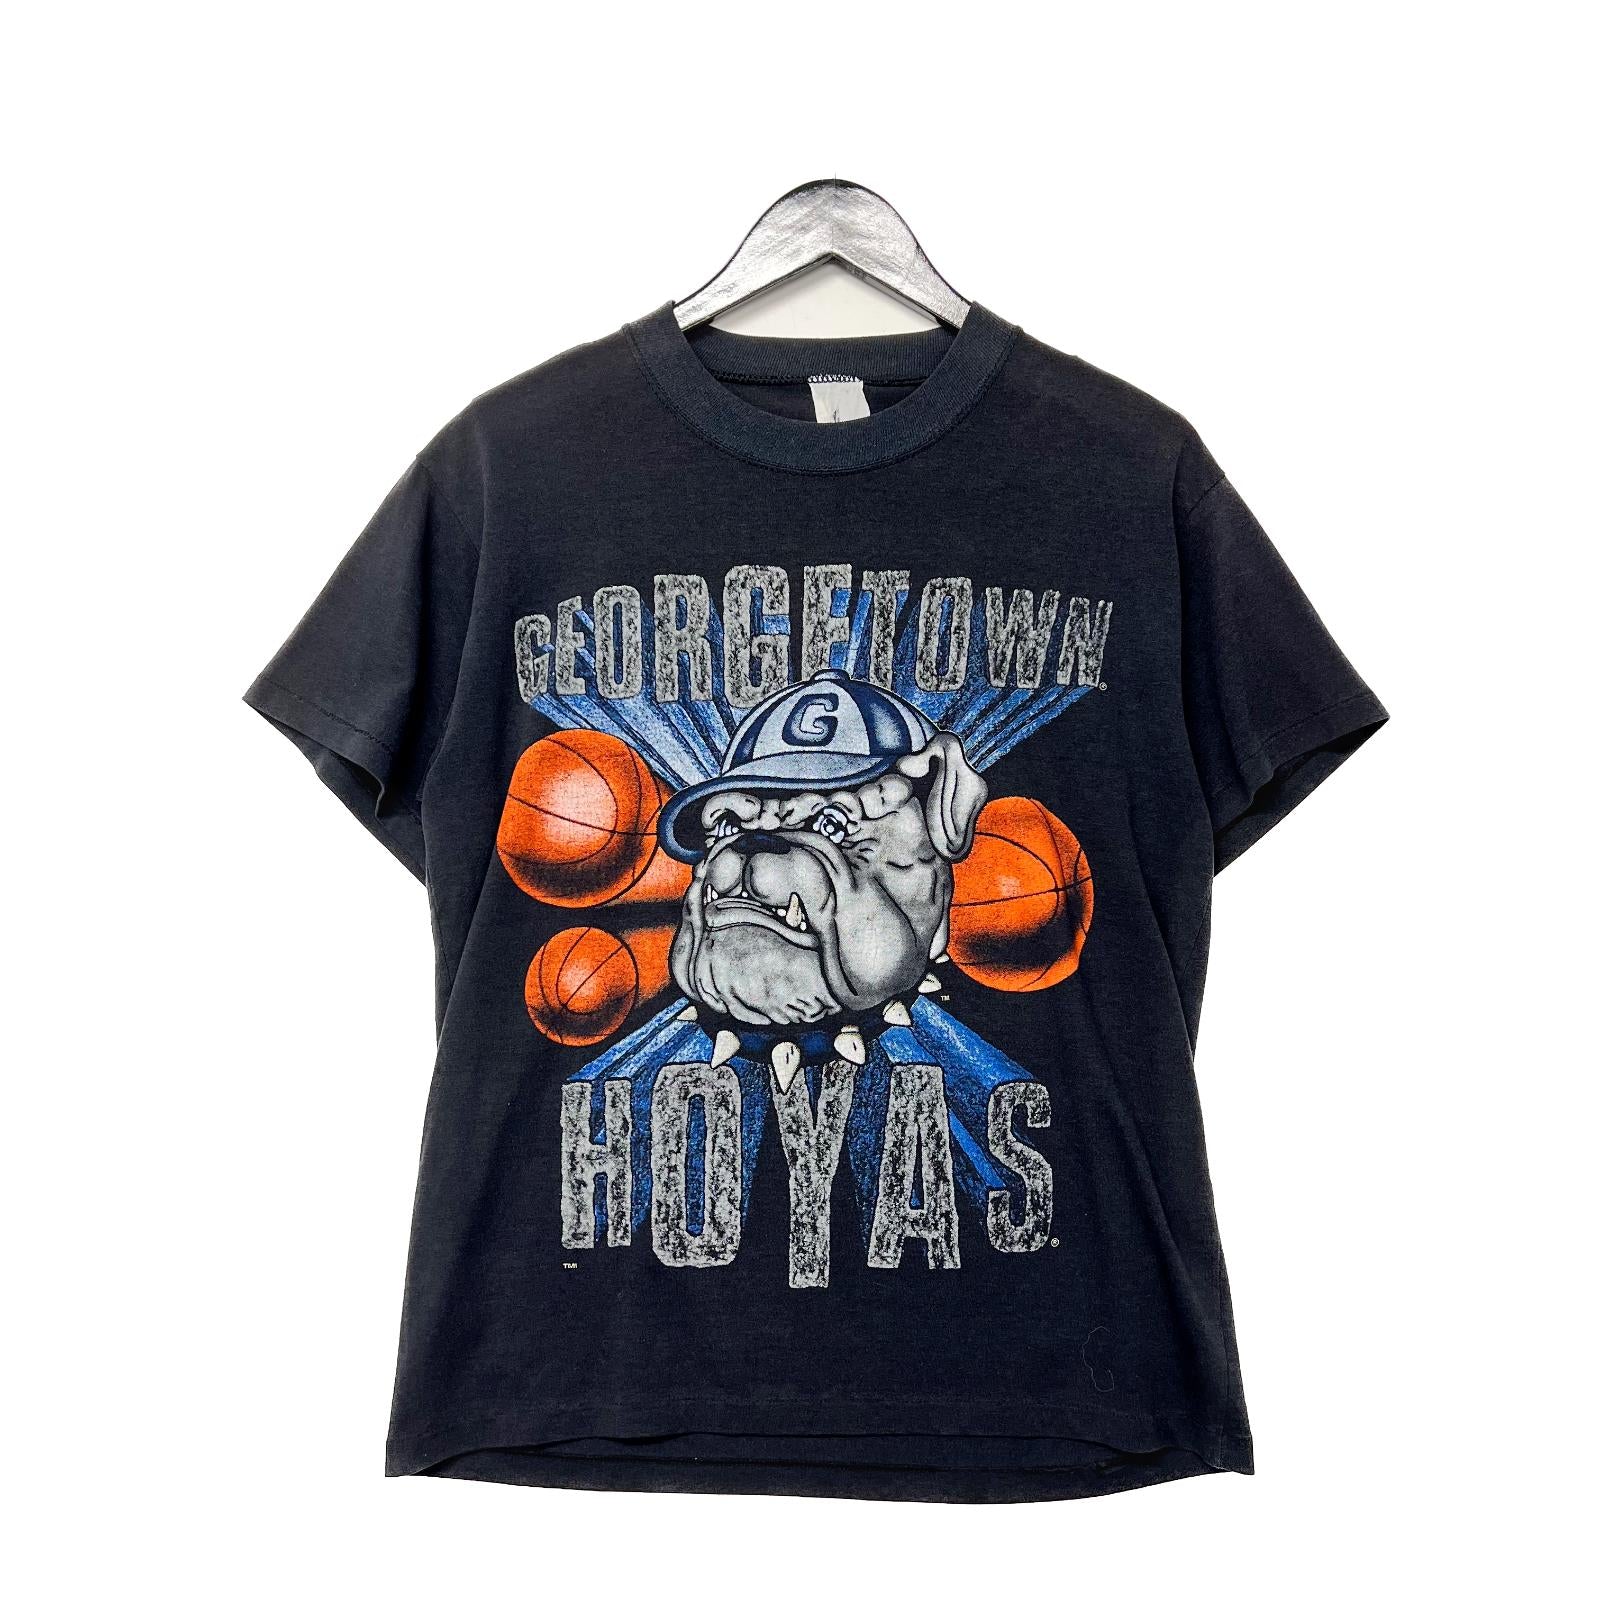 Georgetown University Hoyas T-shirt Size M